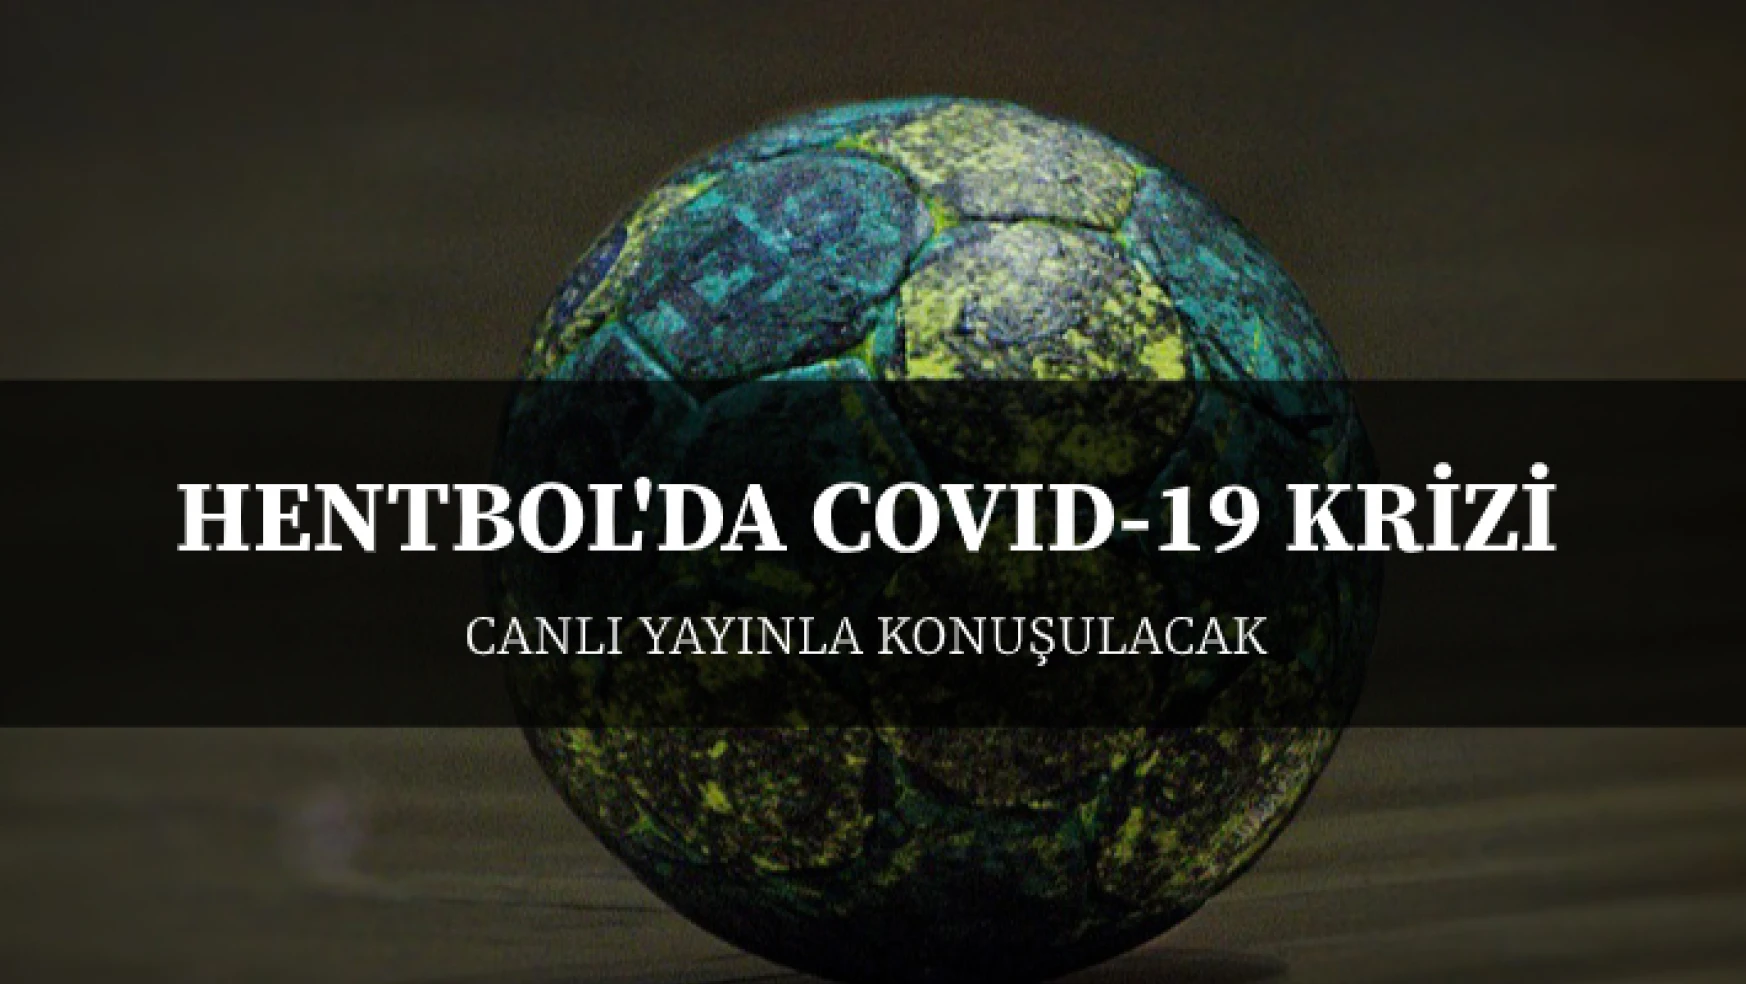 Hentbol’da Covid-19 krizi Saat:15.00’de konuşulacak